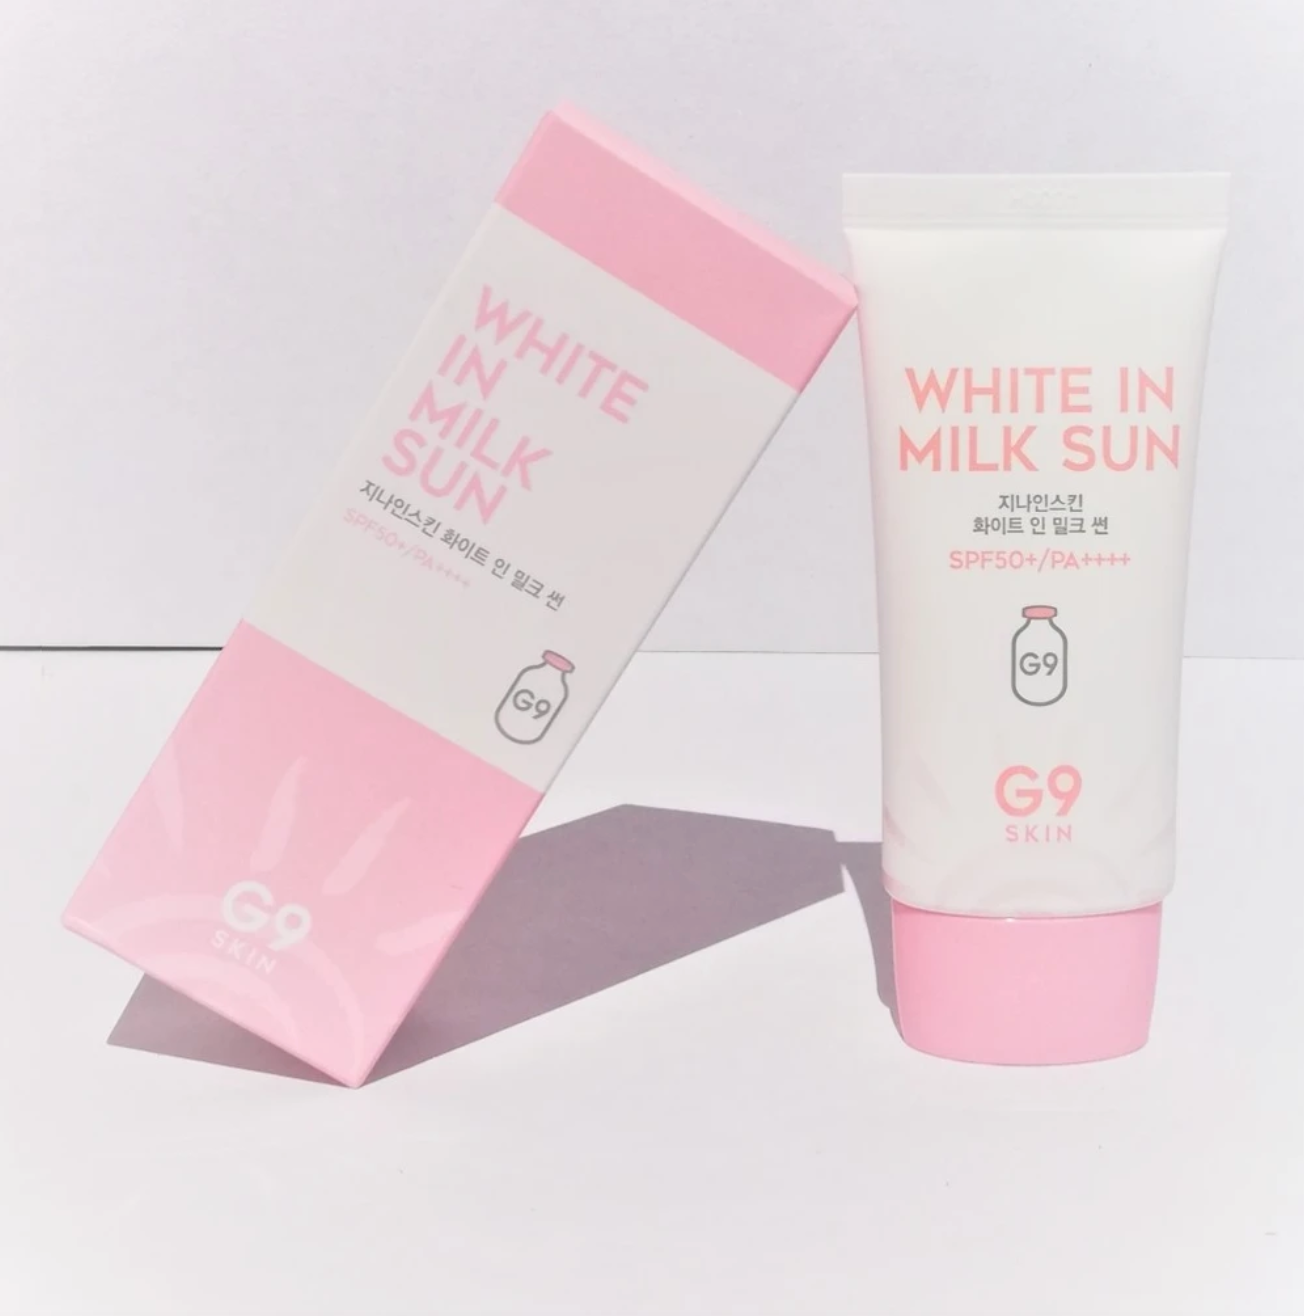 G9SKIN - White in Milk Sun - 40 ml